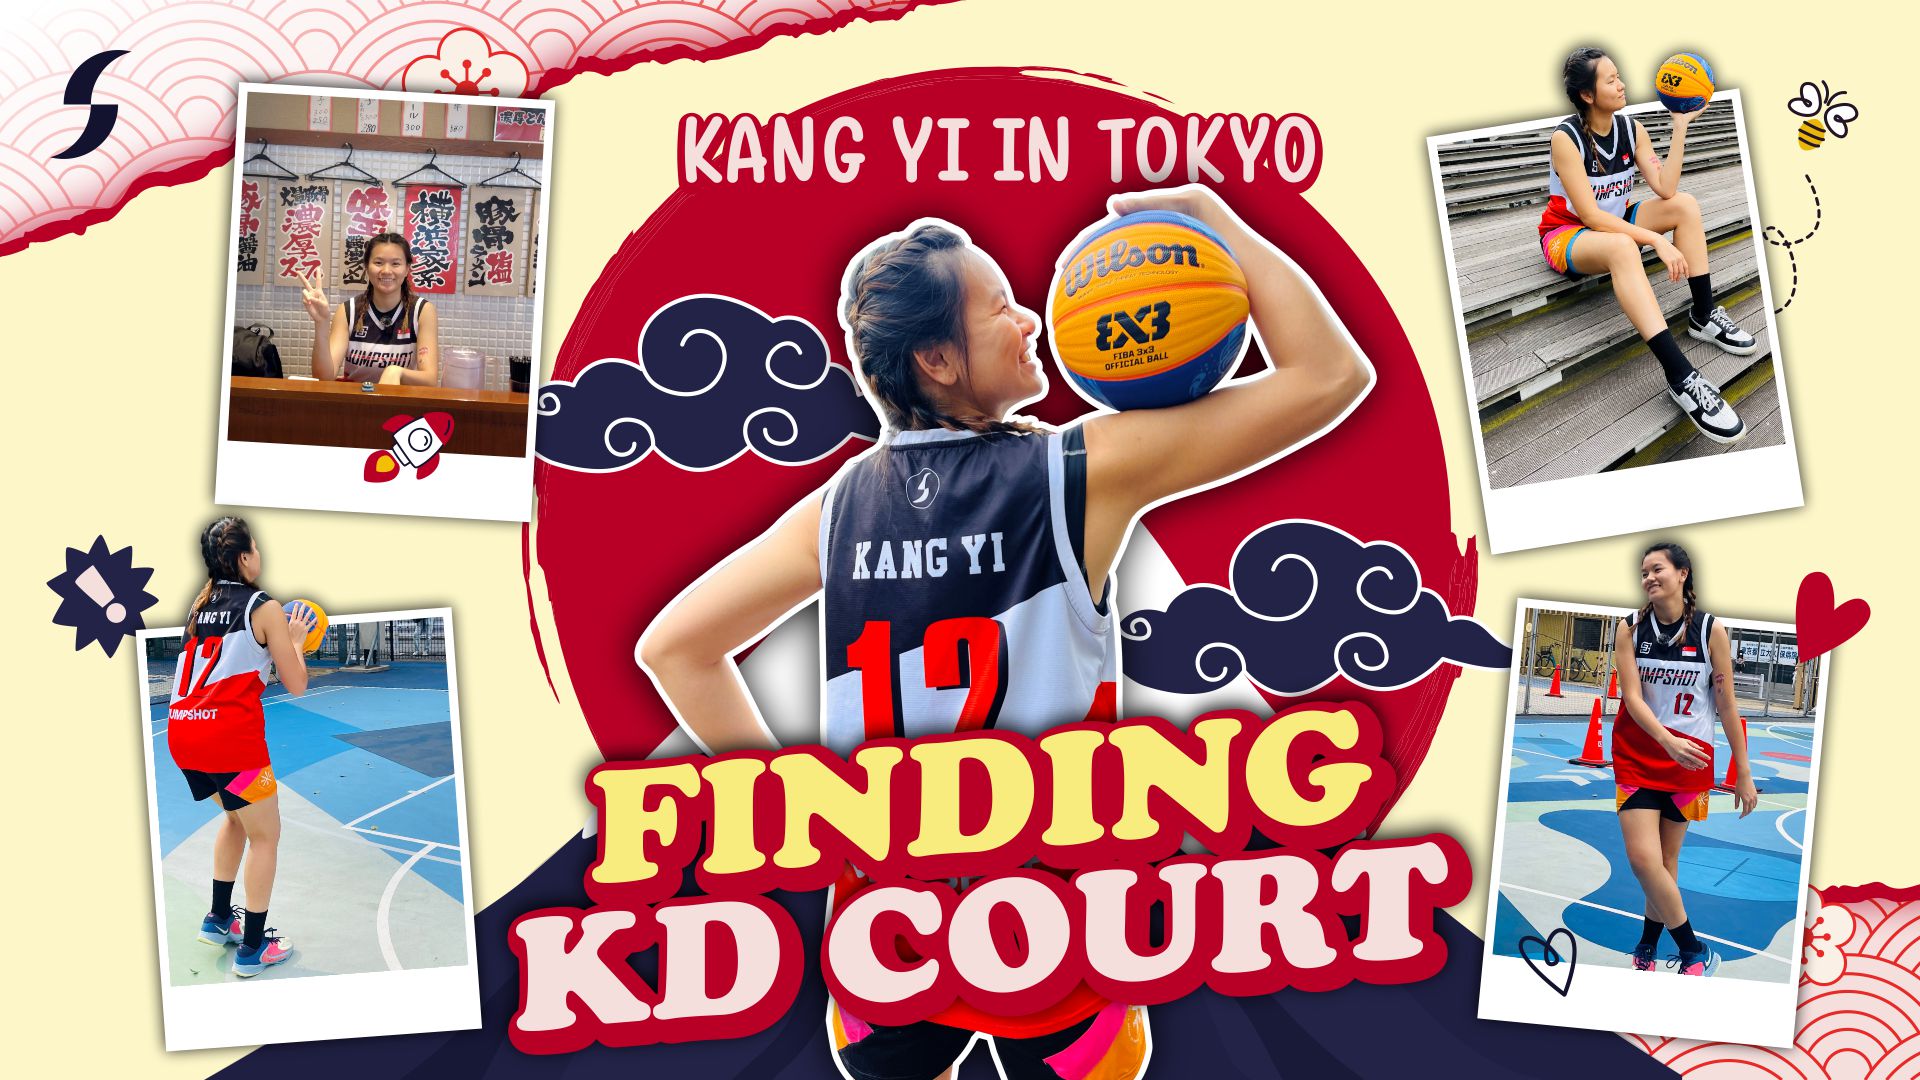 [EXCLUSIVE] Kang Yi in Tokyo: Finding KD Court